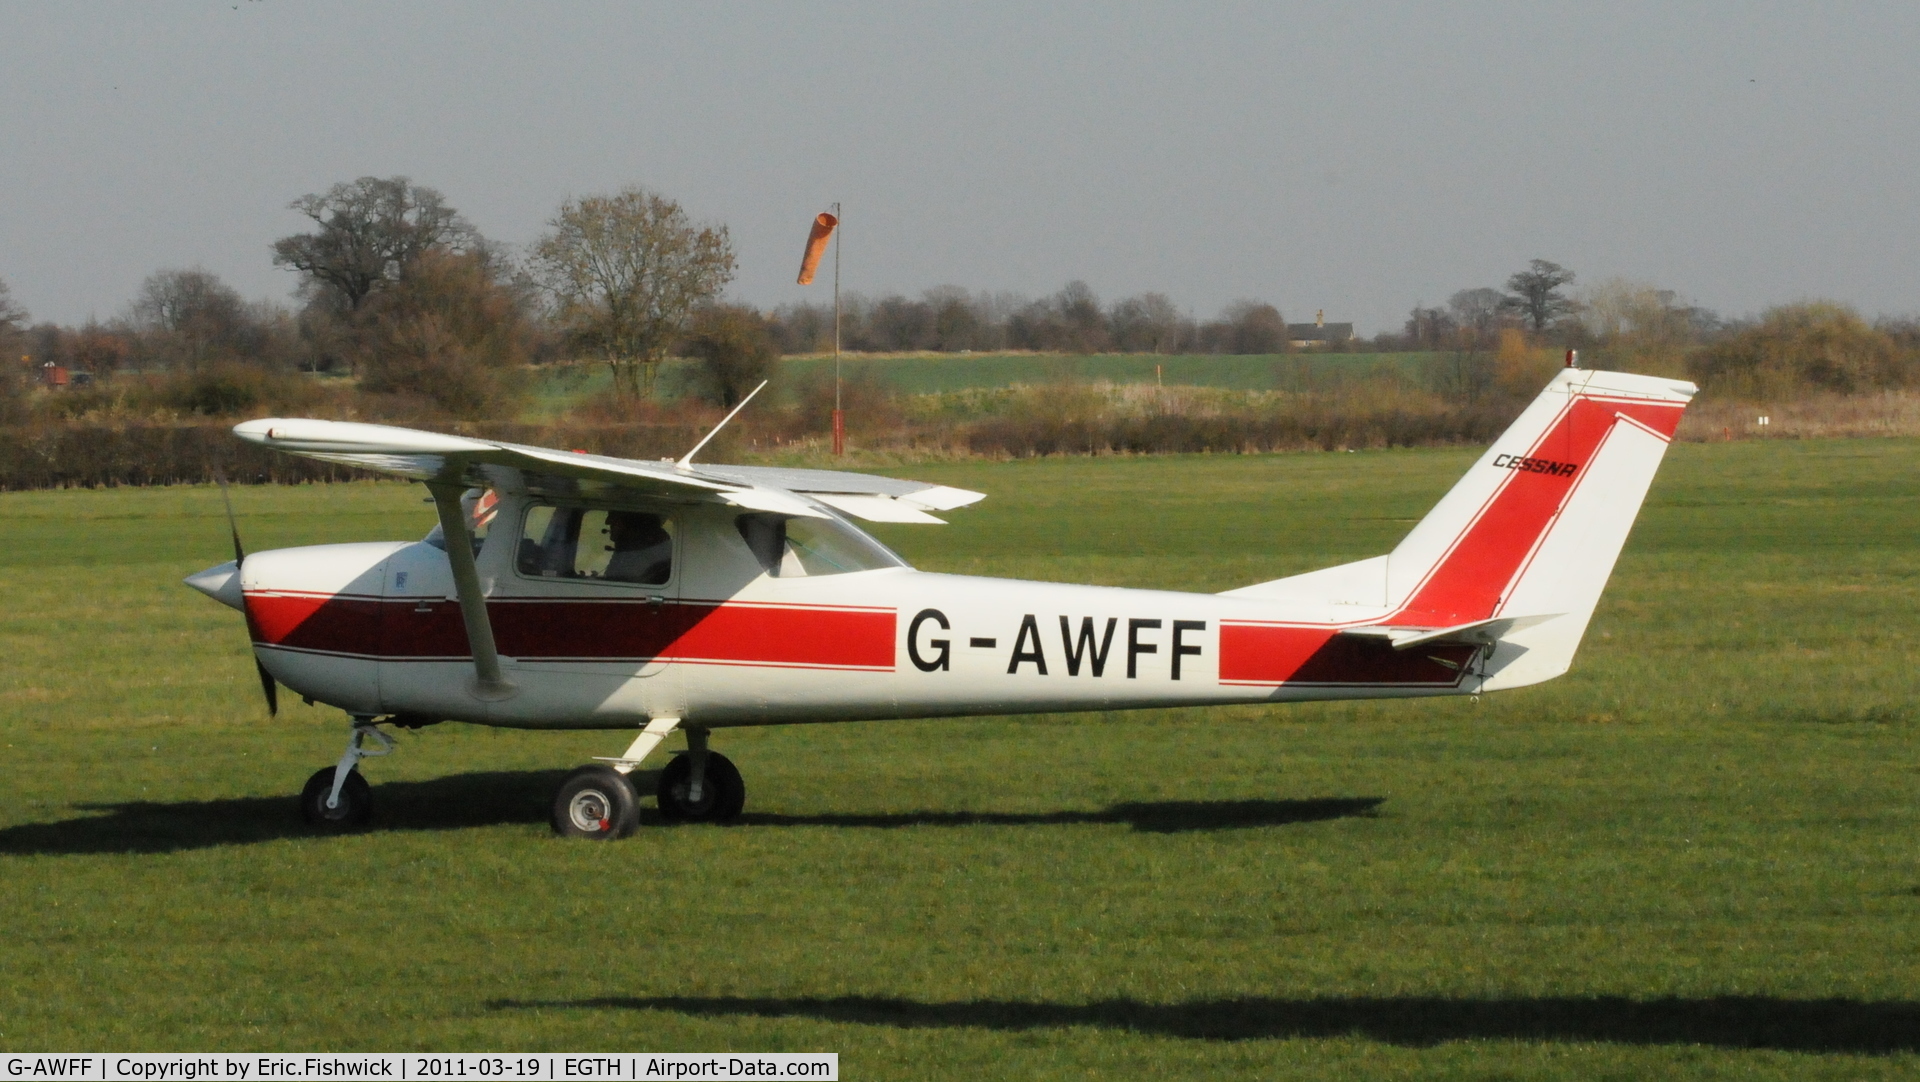 G-AWFF, 1968 Reims F150H C/N 0280, G-AWFF at Shuttleworth (Old Warden) Aerodrome.